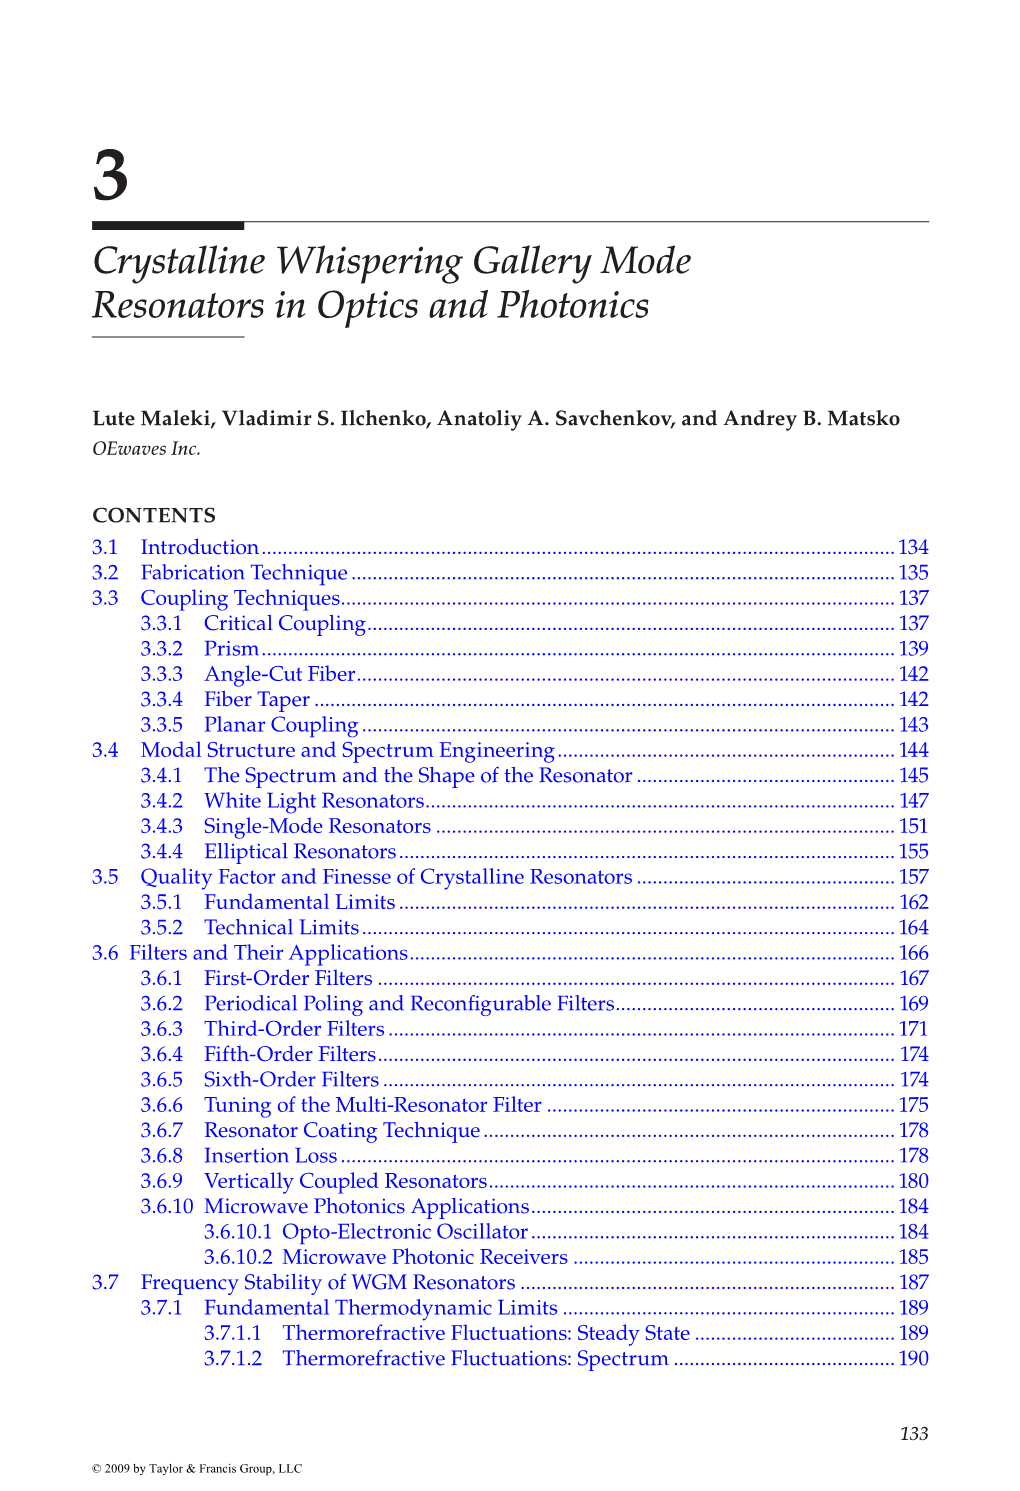 Crystalline Whispering Gallery Mode Resonators in Optics and Photonics